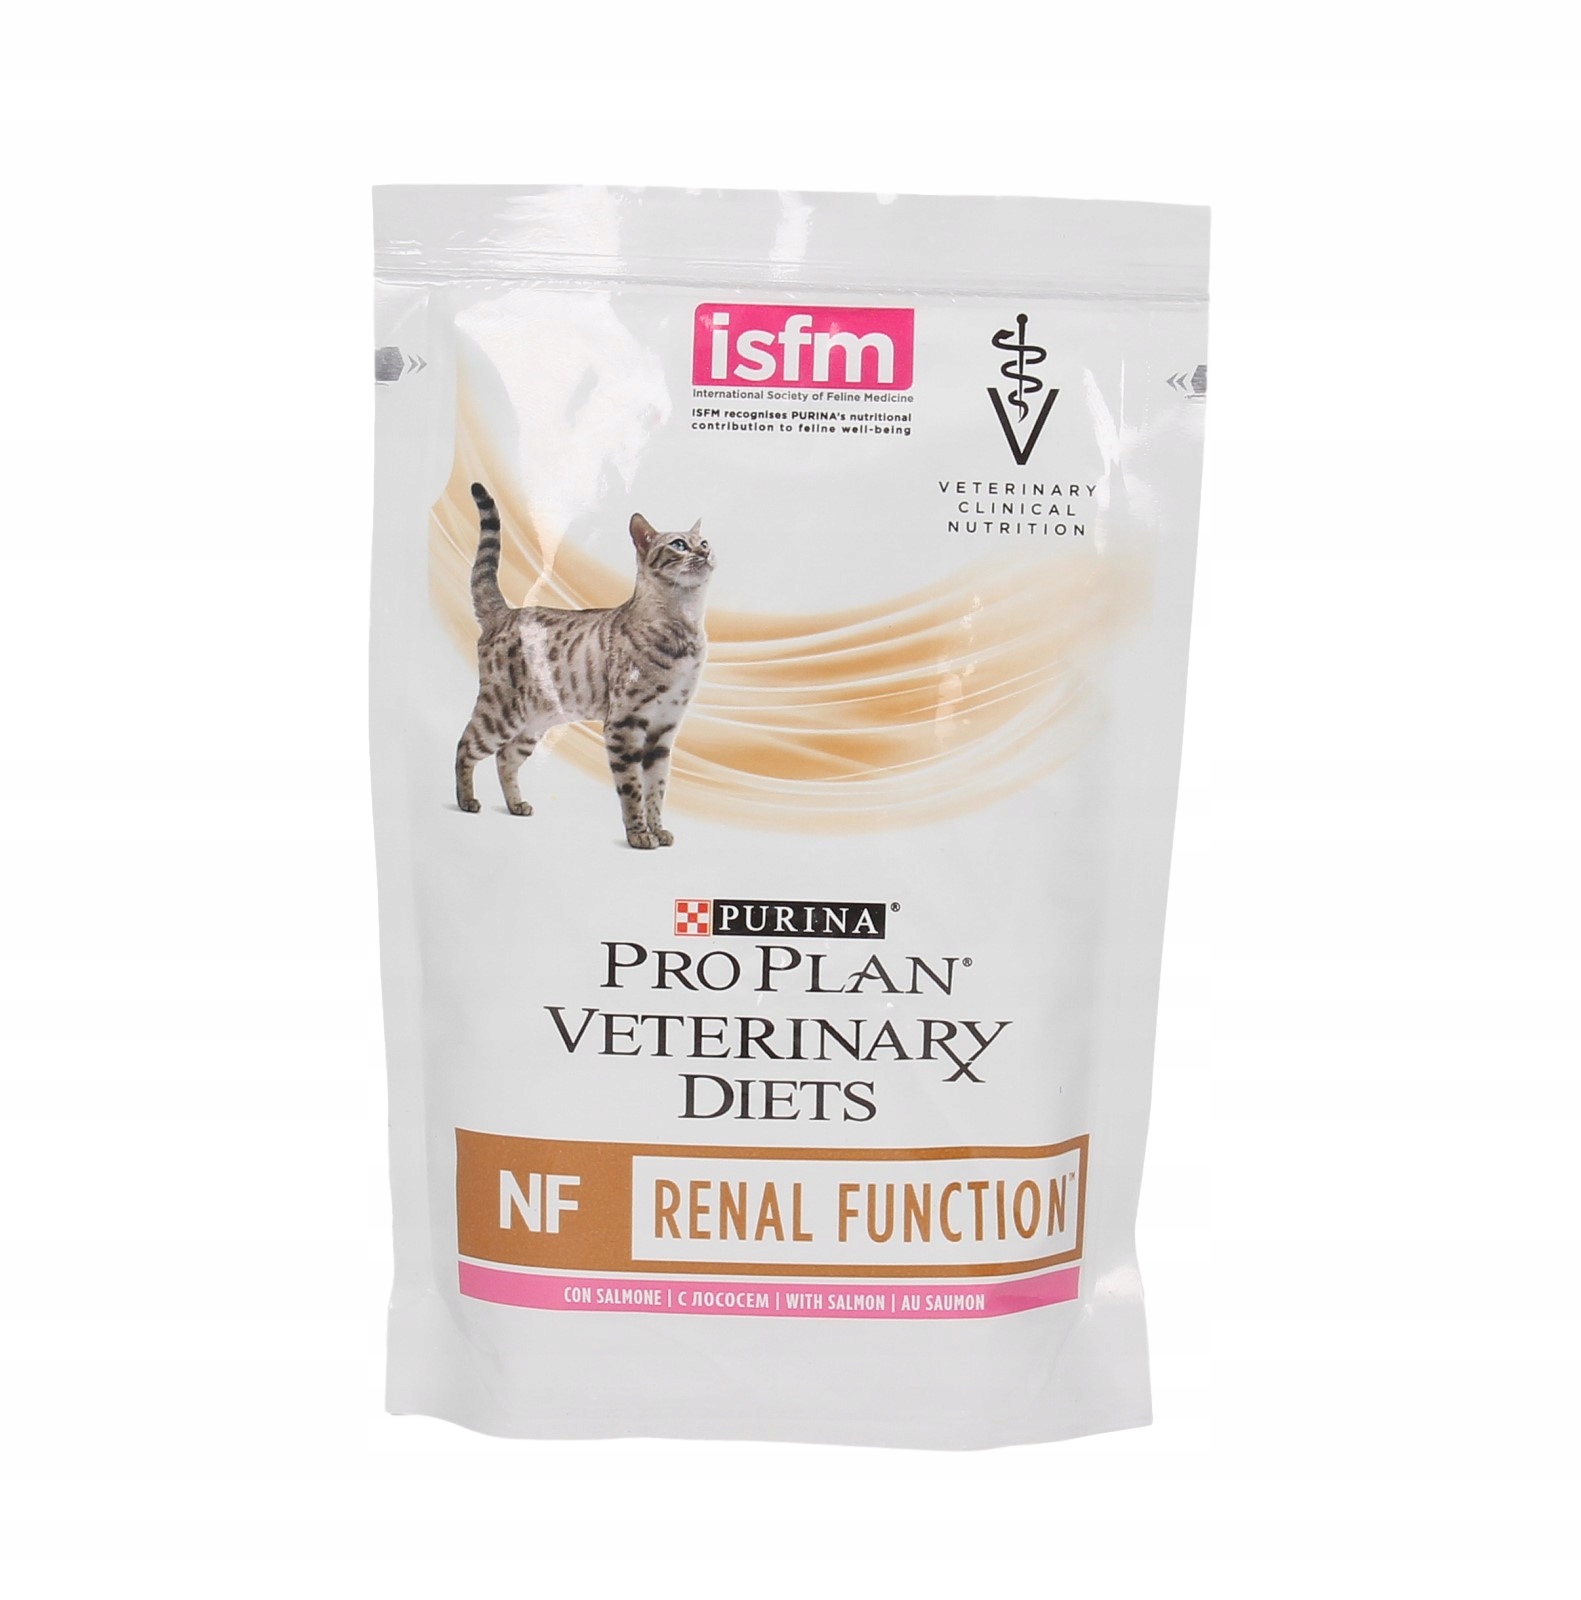 Pro plan renal купить. Renal Purina Pro Plan для кошек Veterinary Diets. Pro Plan renal пауч. NF renal function корм для кошек. Пурина корм для кошек renal function.